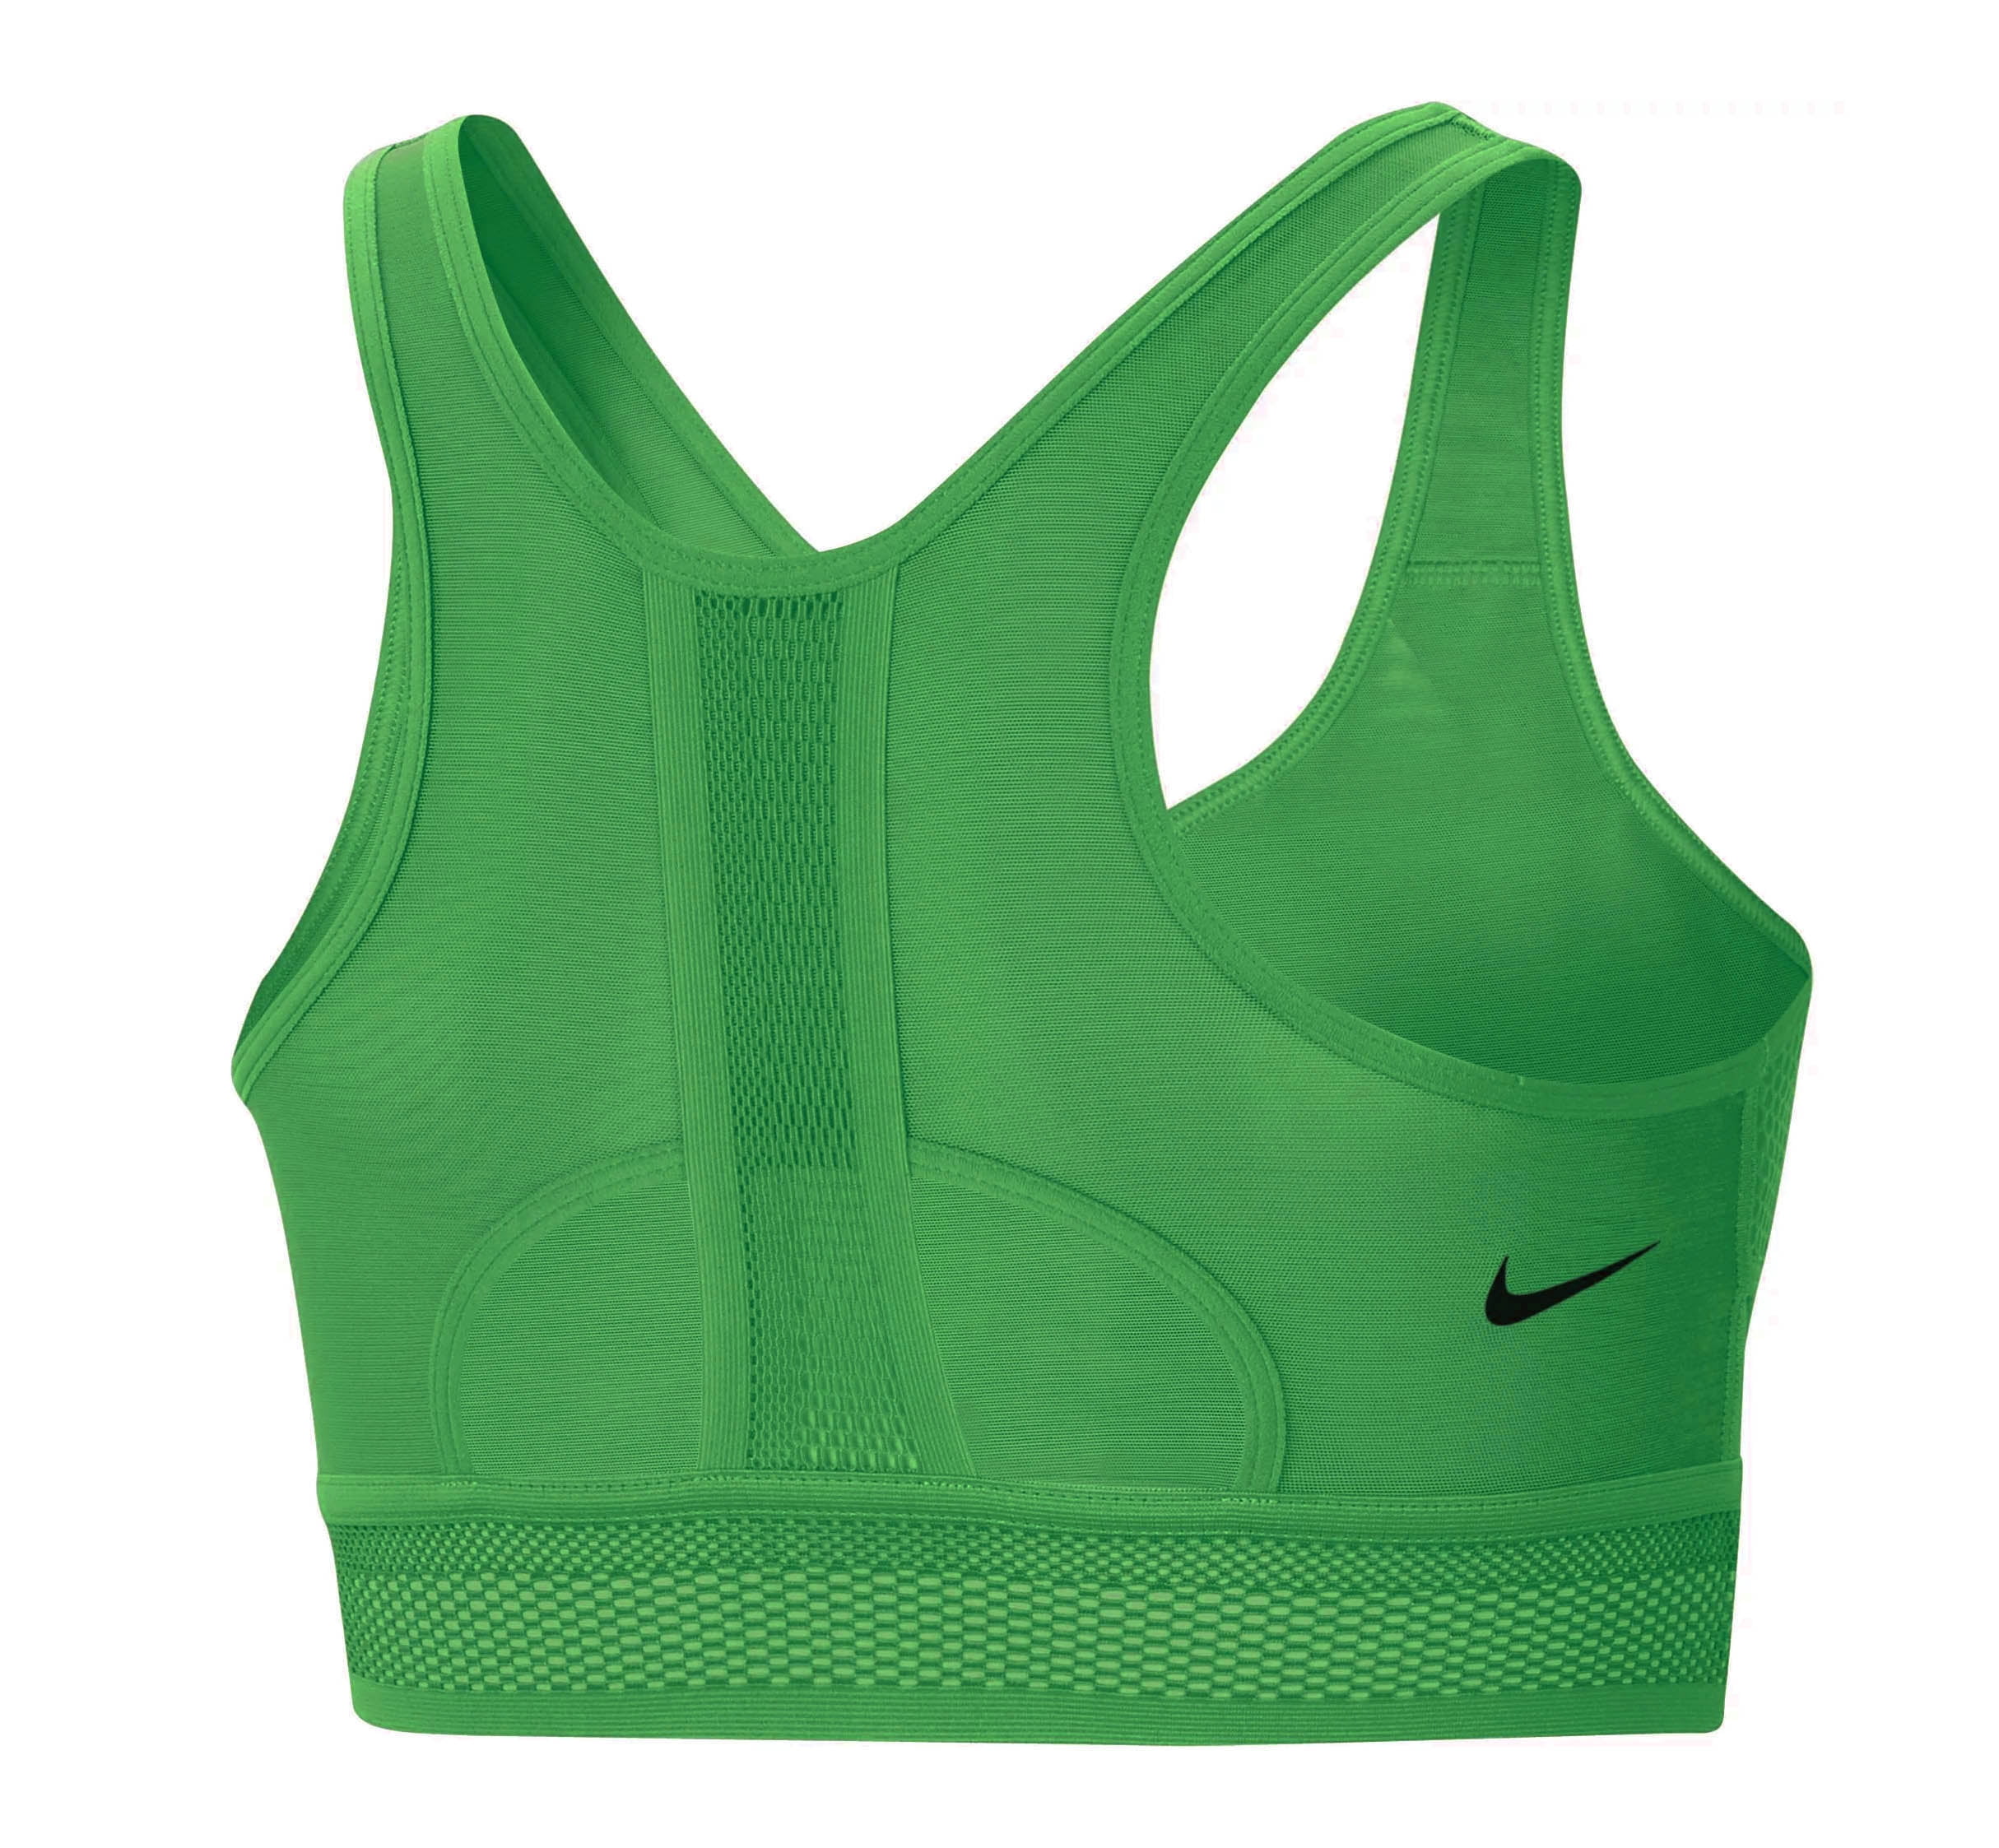 Nike Women's Training Ultrabreathe Sports Training Bra (Green, X